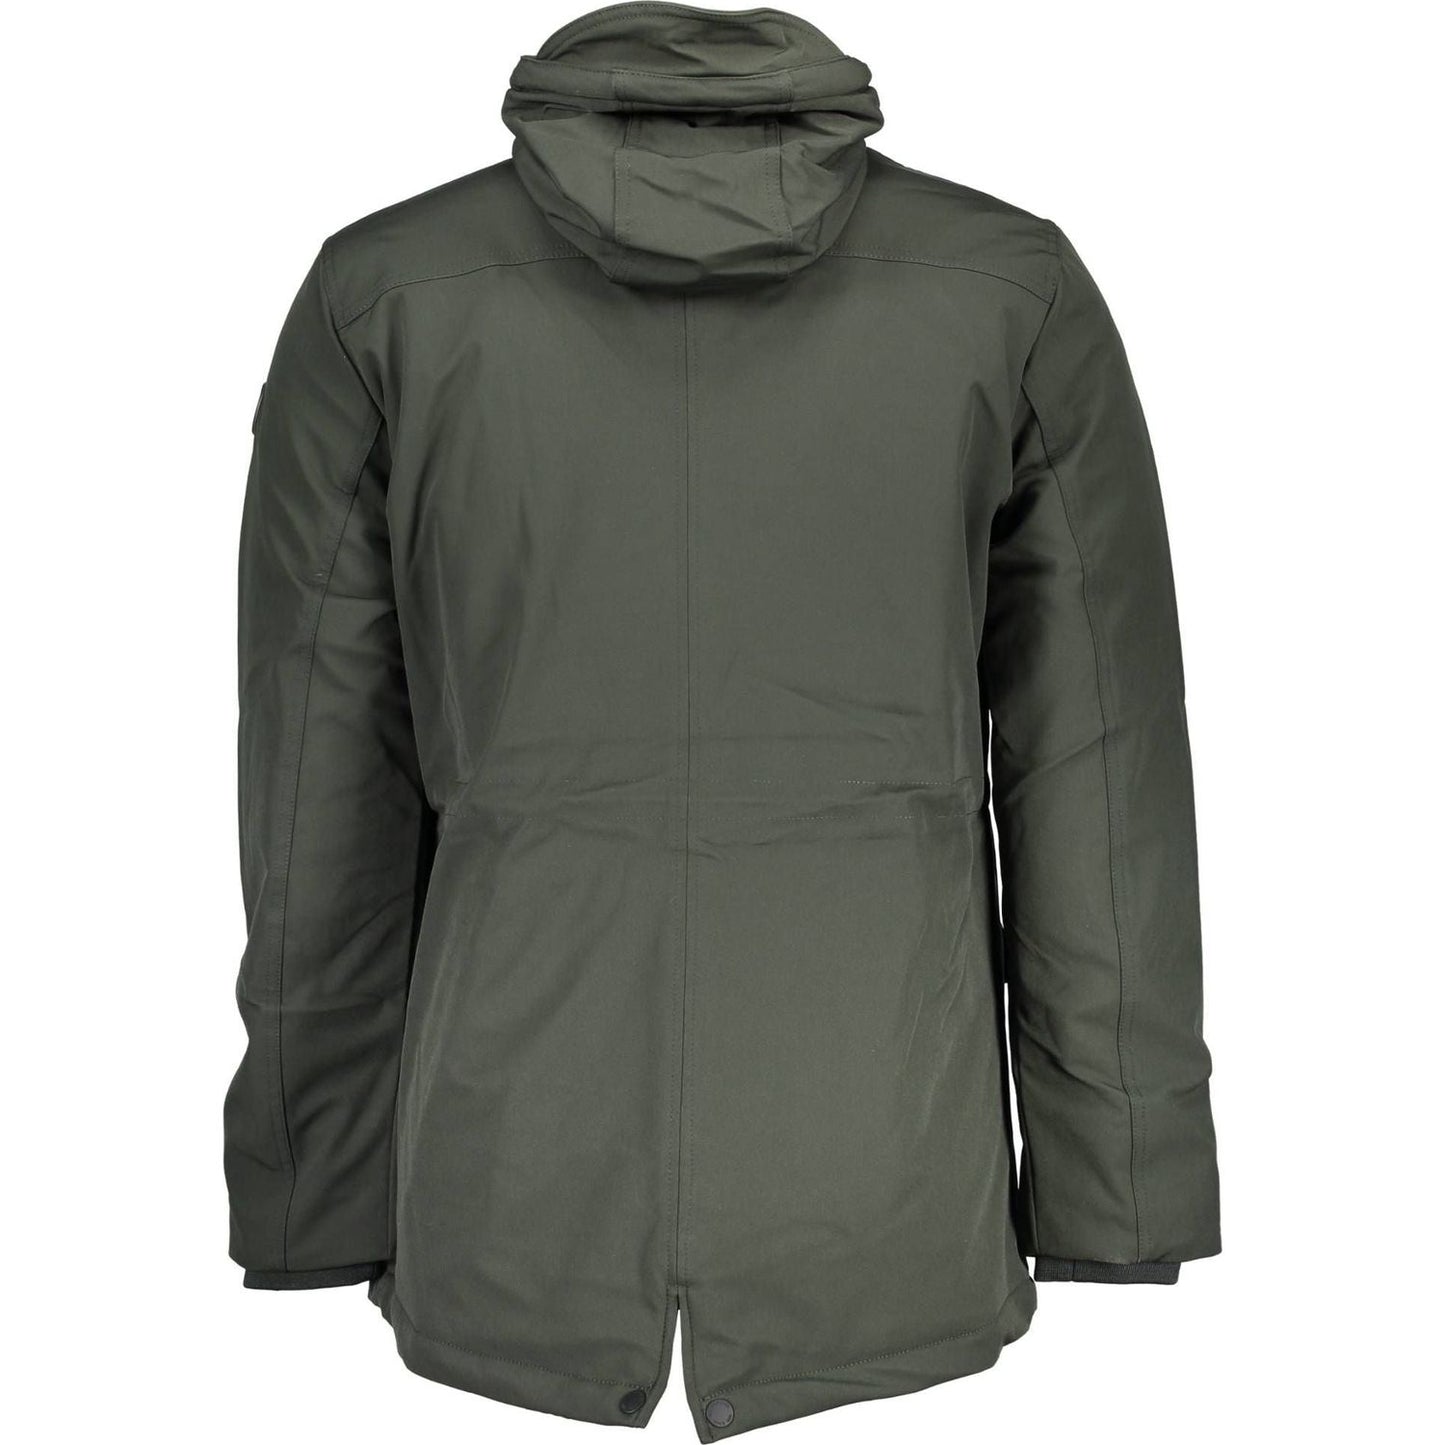 U.S. POLO ASSN. Versatile Green Hooded Jacket with Logo Detail versatile-green-hooded-jacket-with-logo-detail